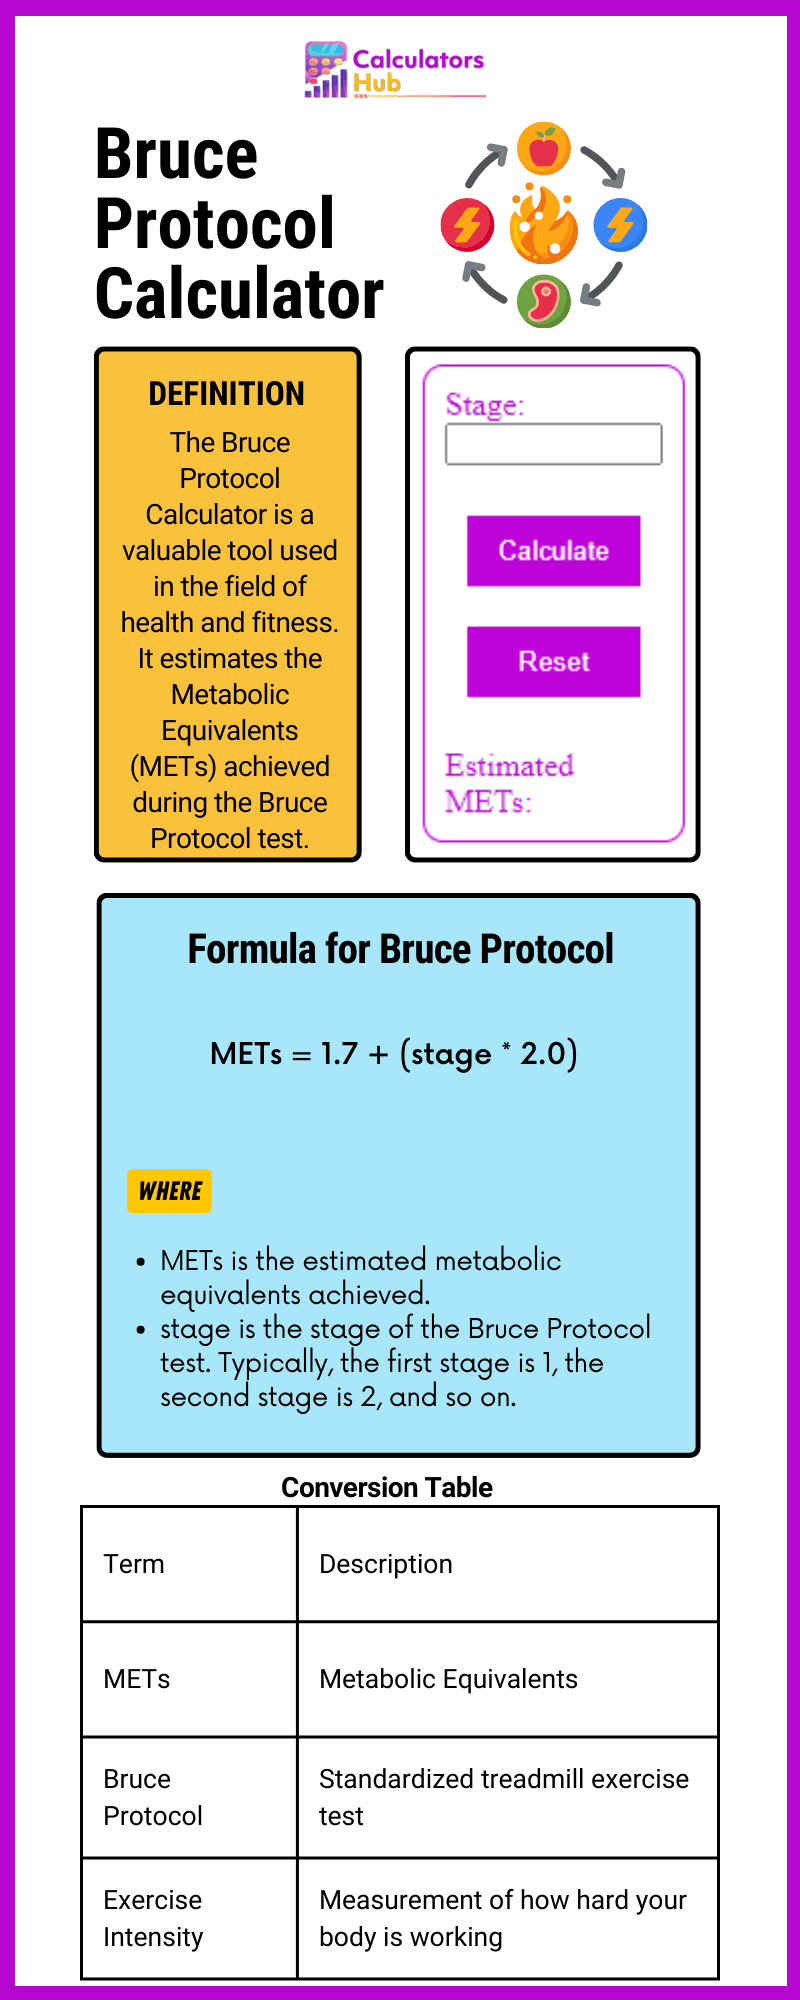 Bruce Protocol Calculator